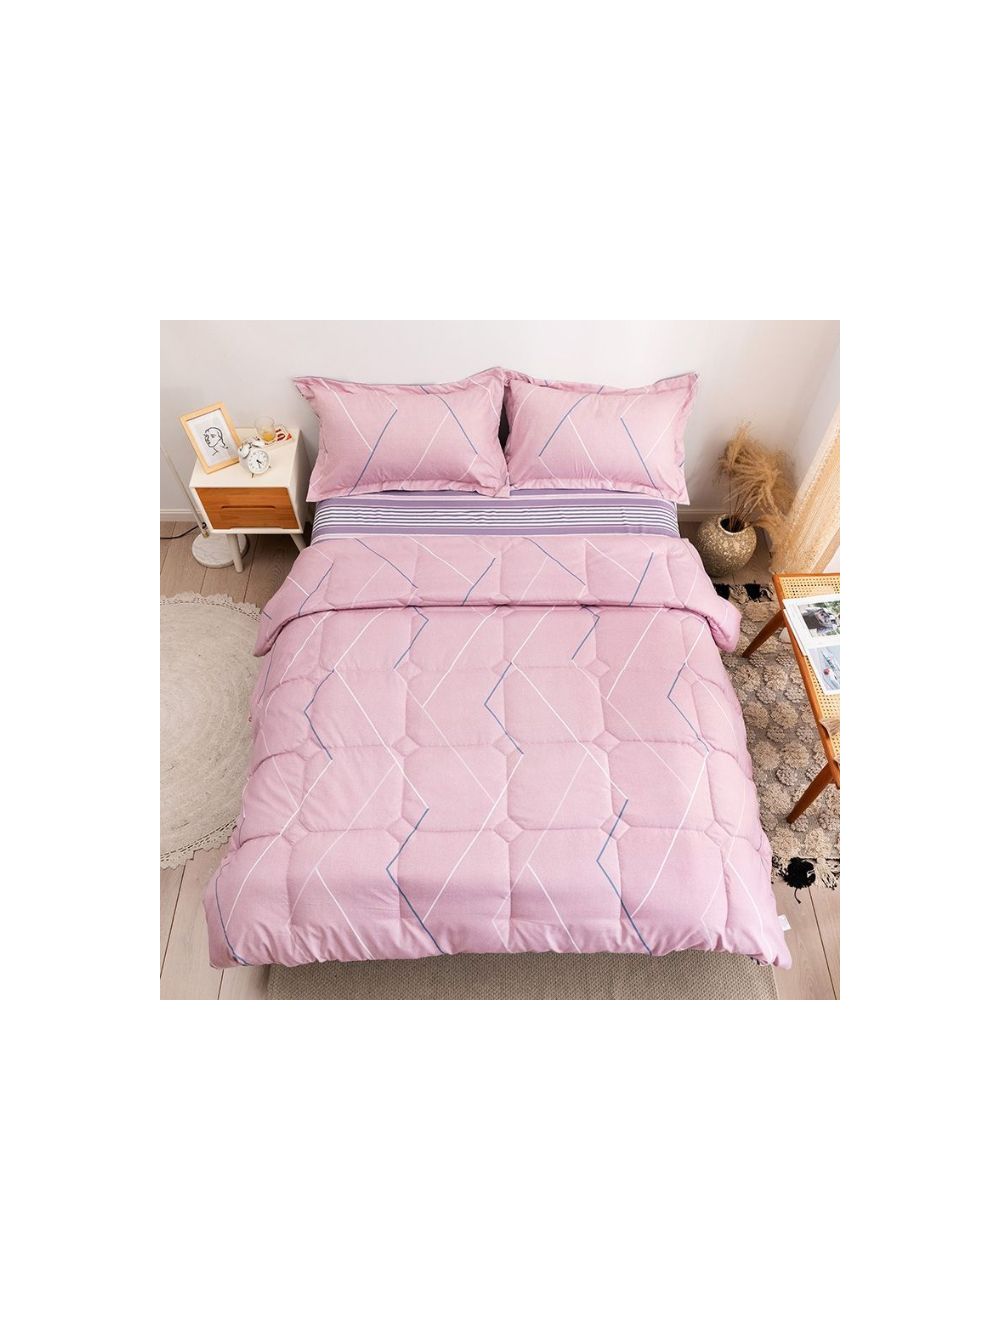 Rishahome 4 Piece Queen Size Comforter Set Microfiber Pink 210x230cm-PFLCS0004